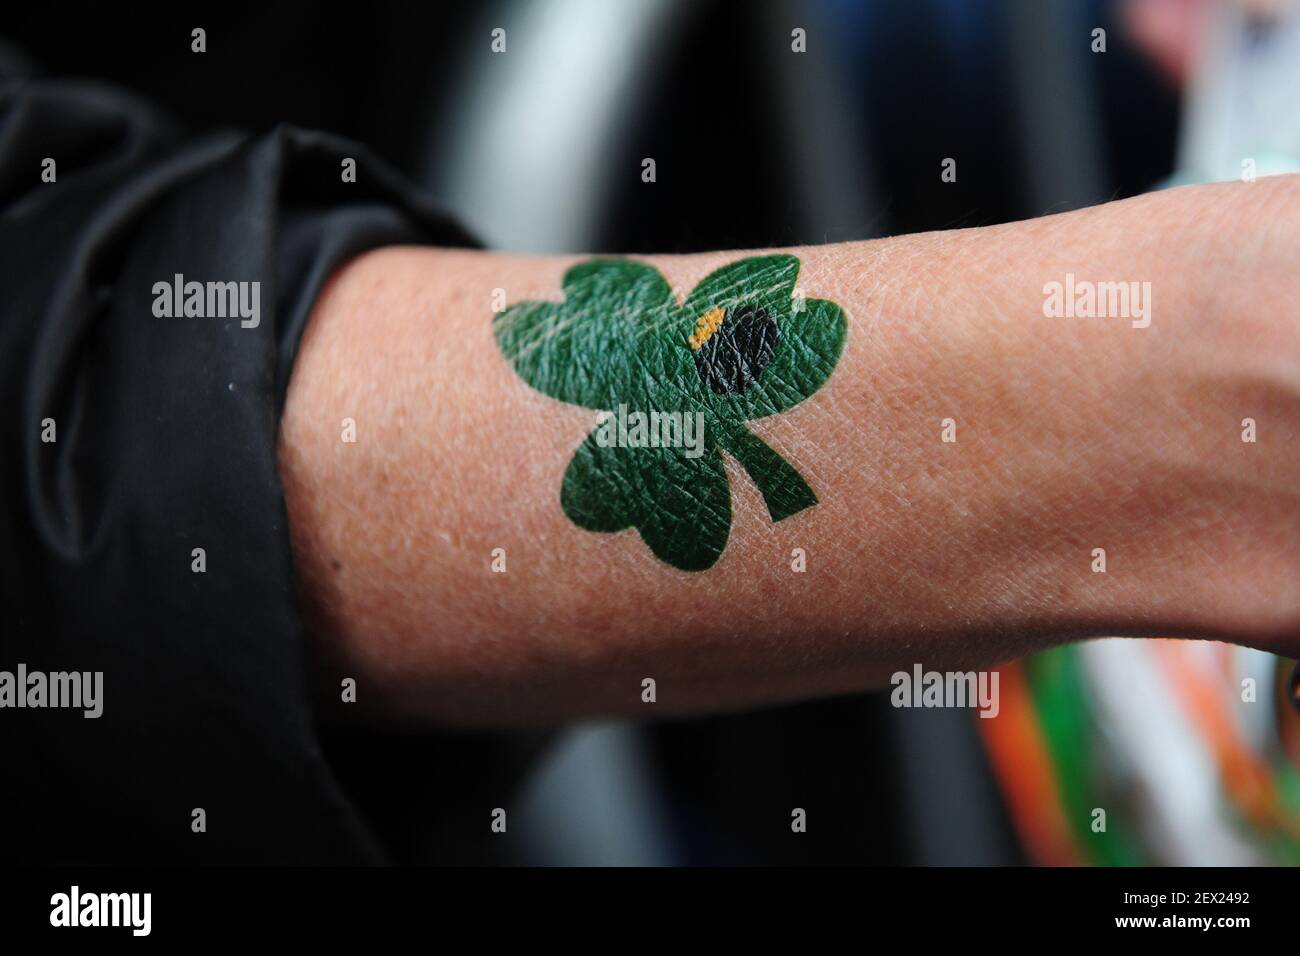 Shamrock Tattoos: Meanings, Tattoo Designs & Ideas